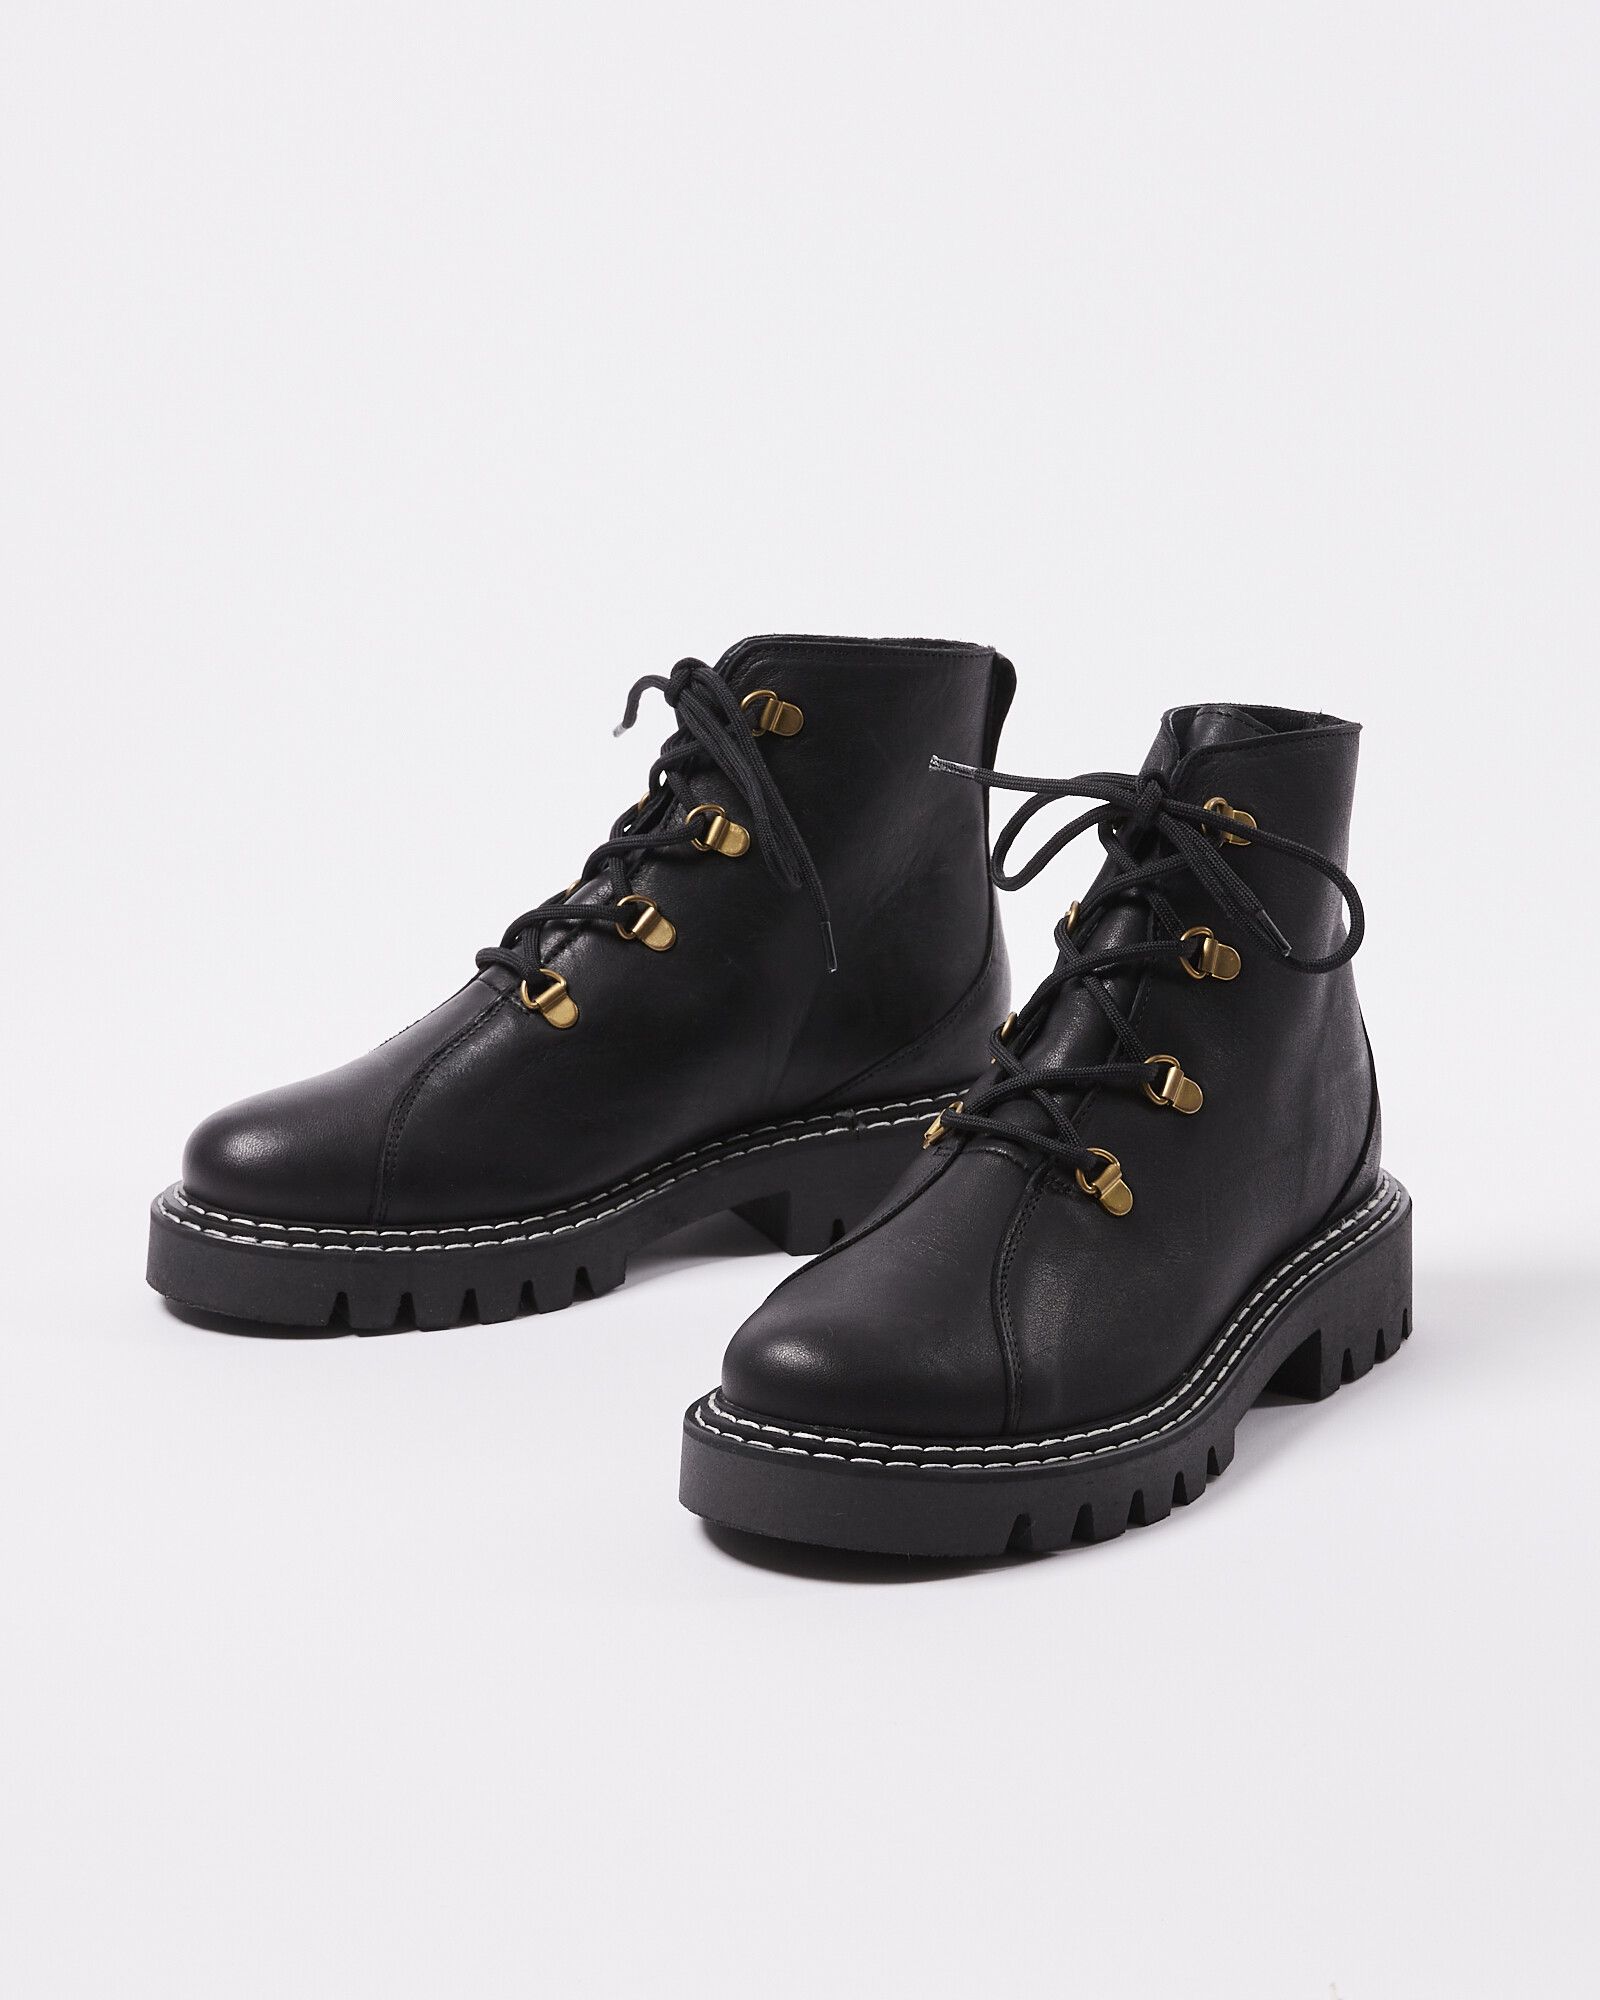 Selected Femme Black Leather Ankle Boots | Oliver Bonas